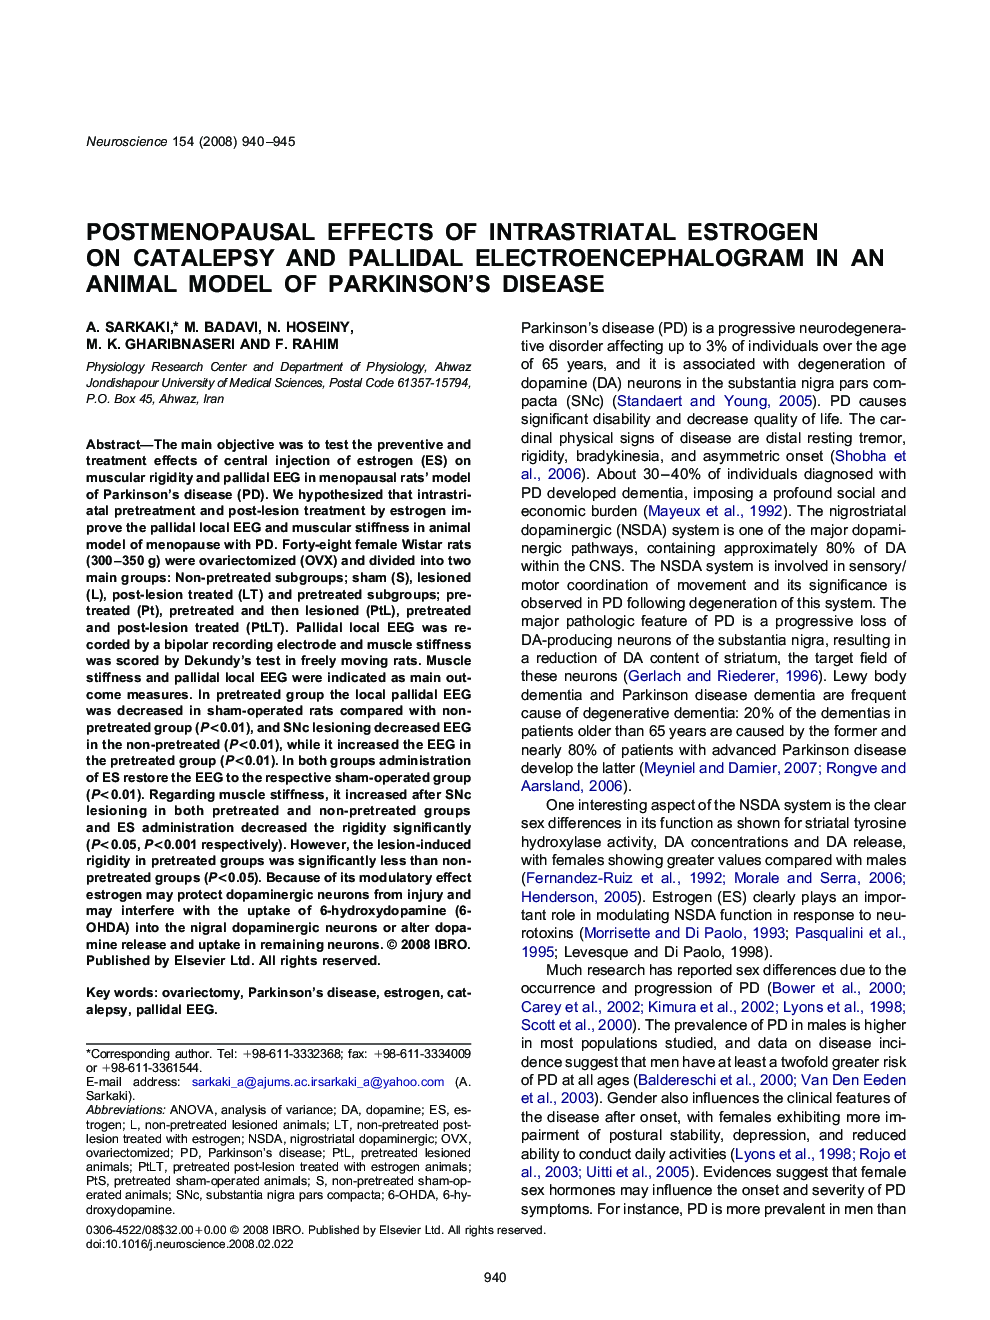 Postmenopausal effects of intrastriatal estrogen on catalepsy and pallidal electroencephalogram in an animal model of Parkinson's disease